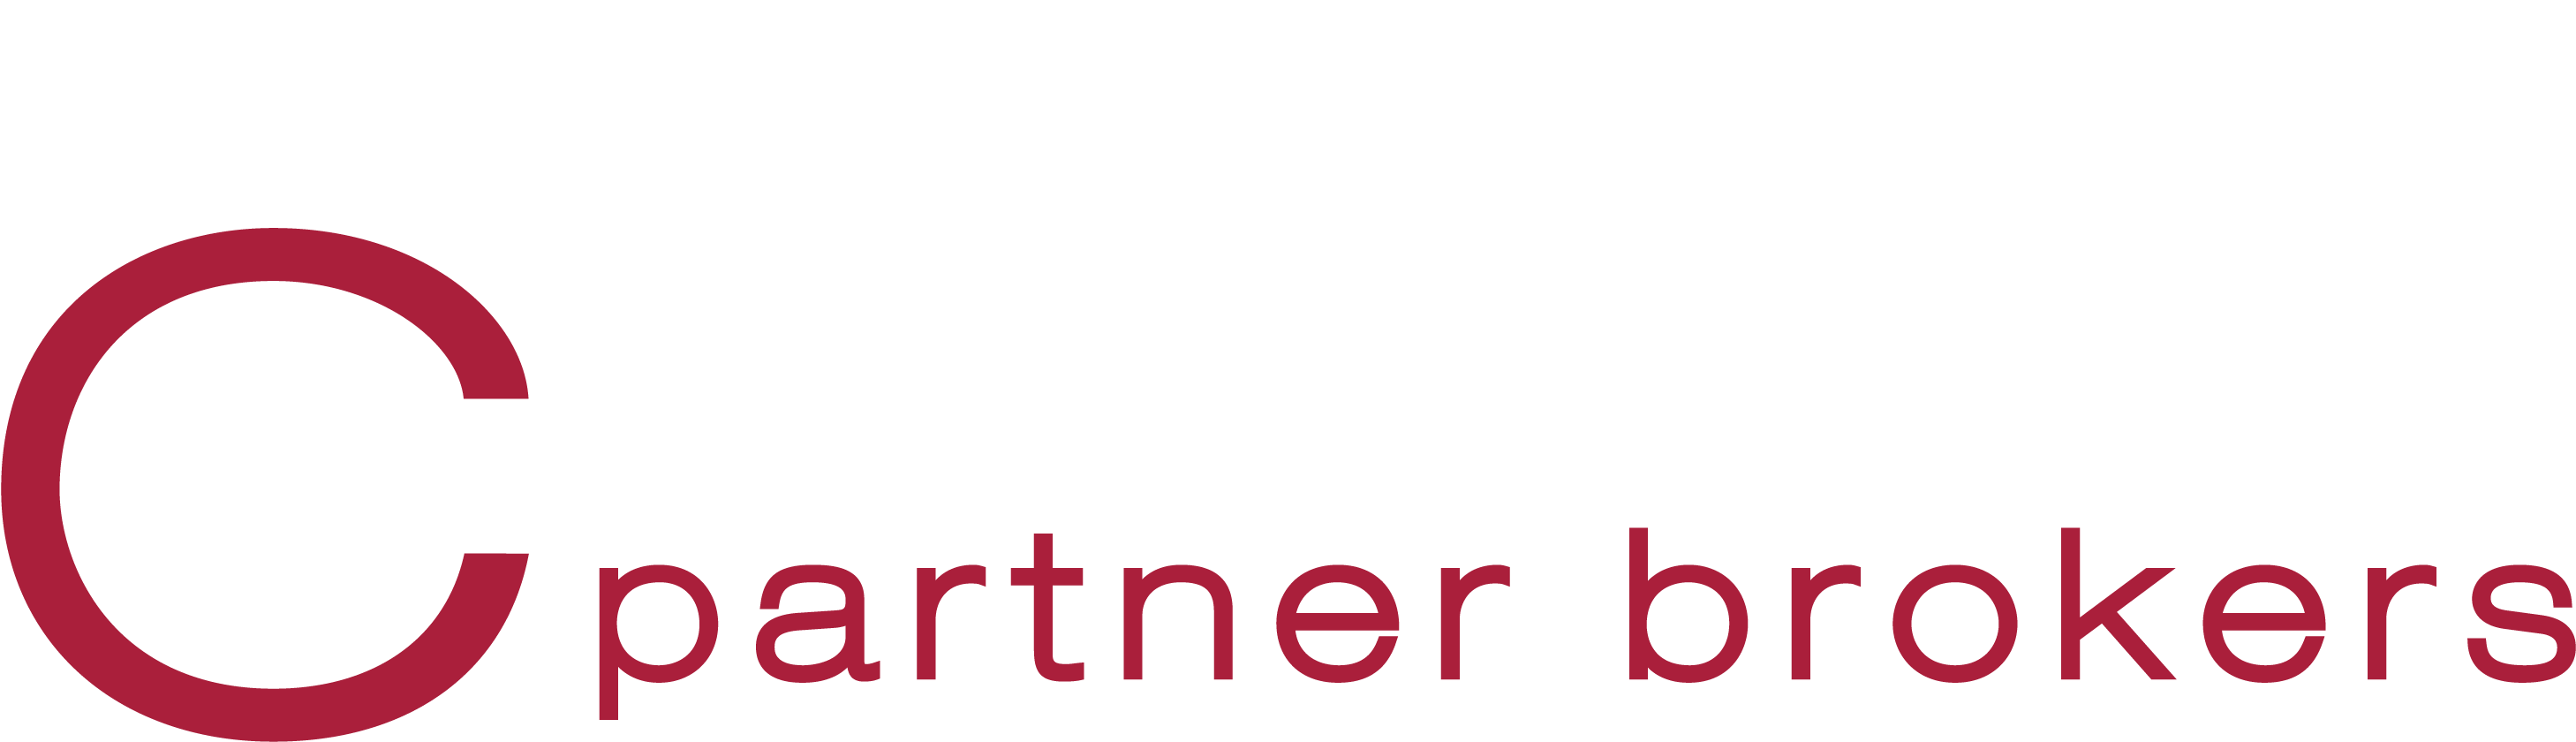 Darwin Clayton Partner Brokers logo